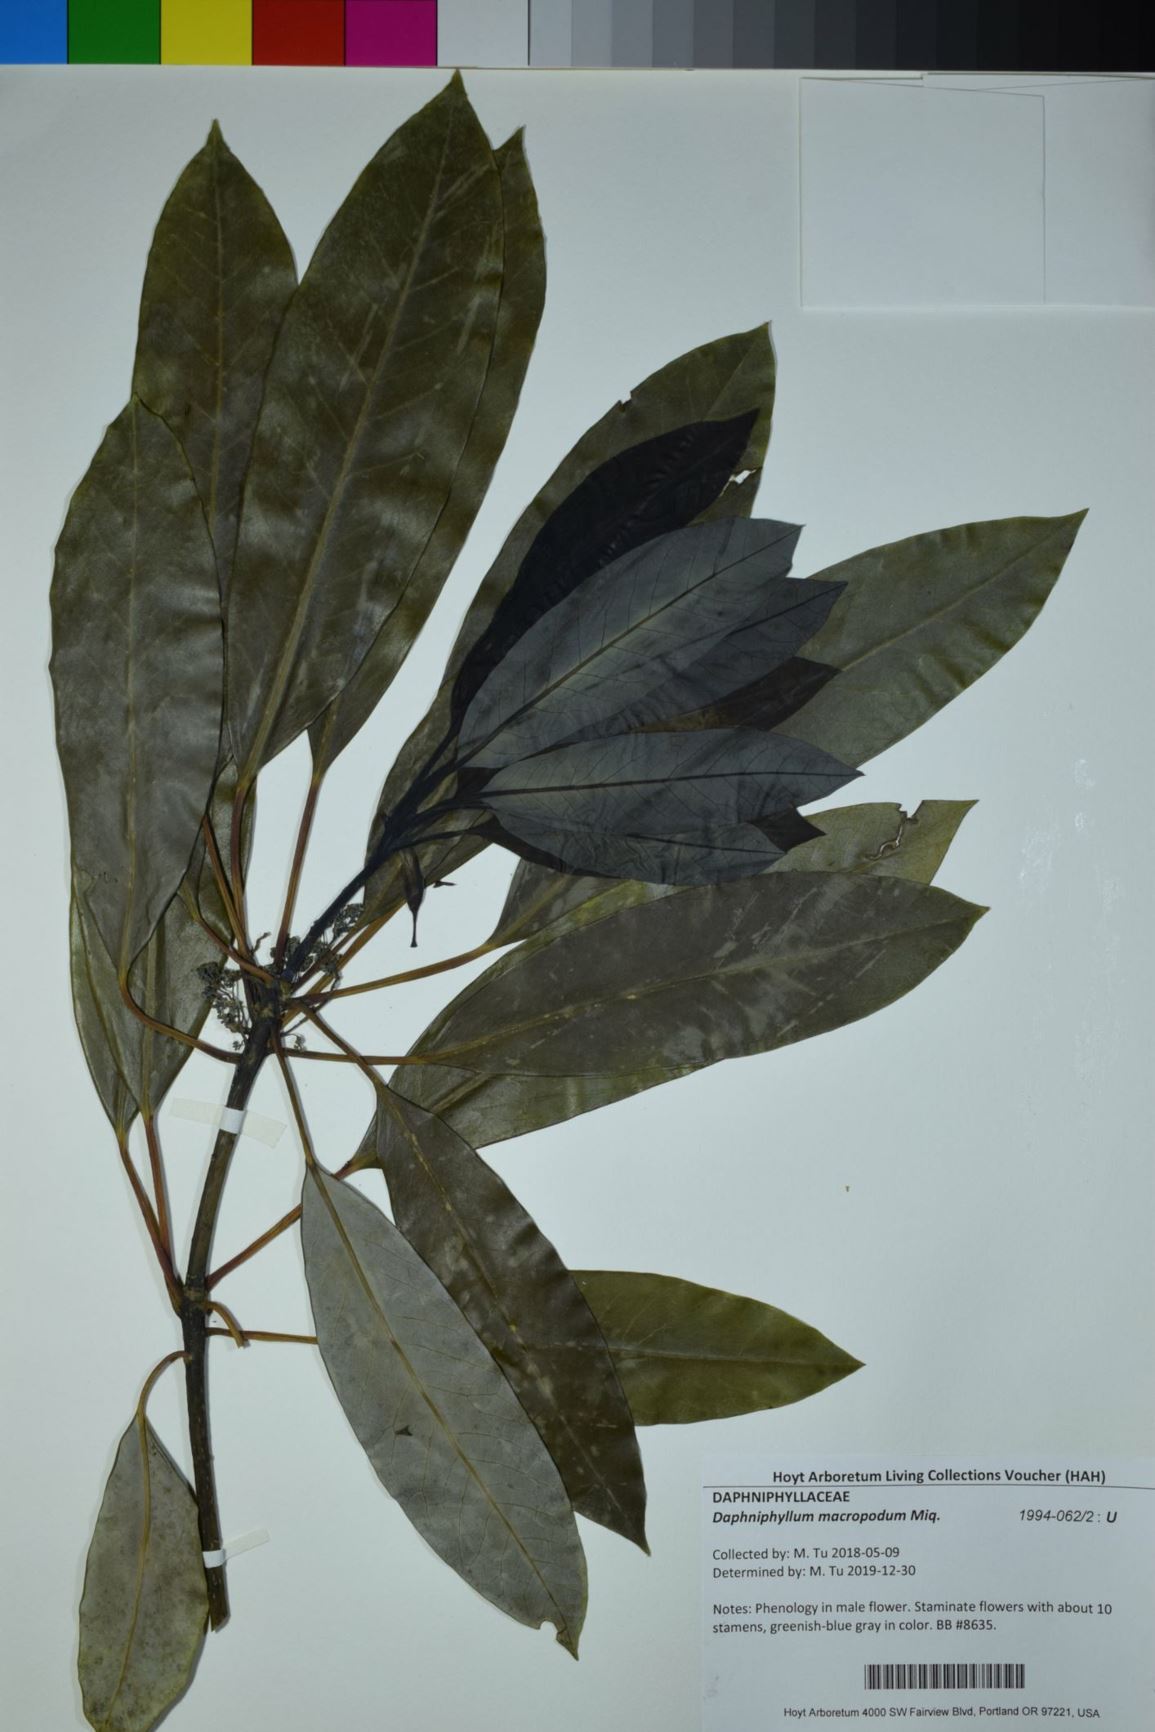 Daphniphyllum macropodum - false daphne, redneck rhododendron